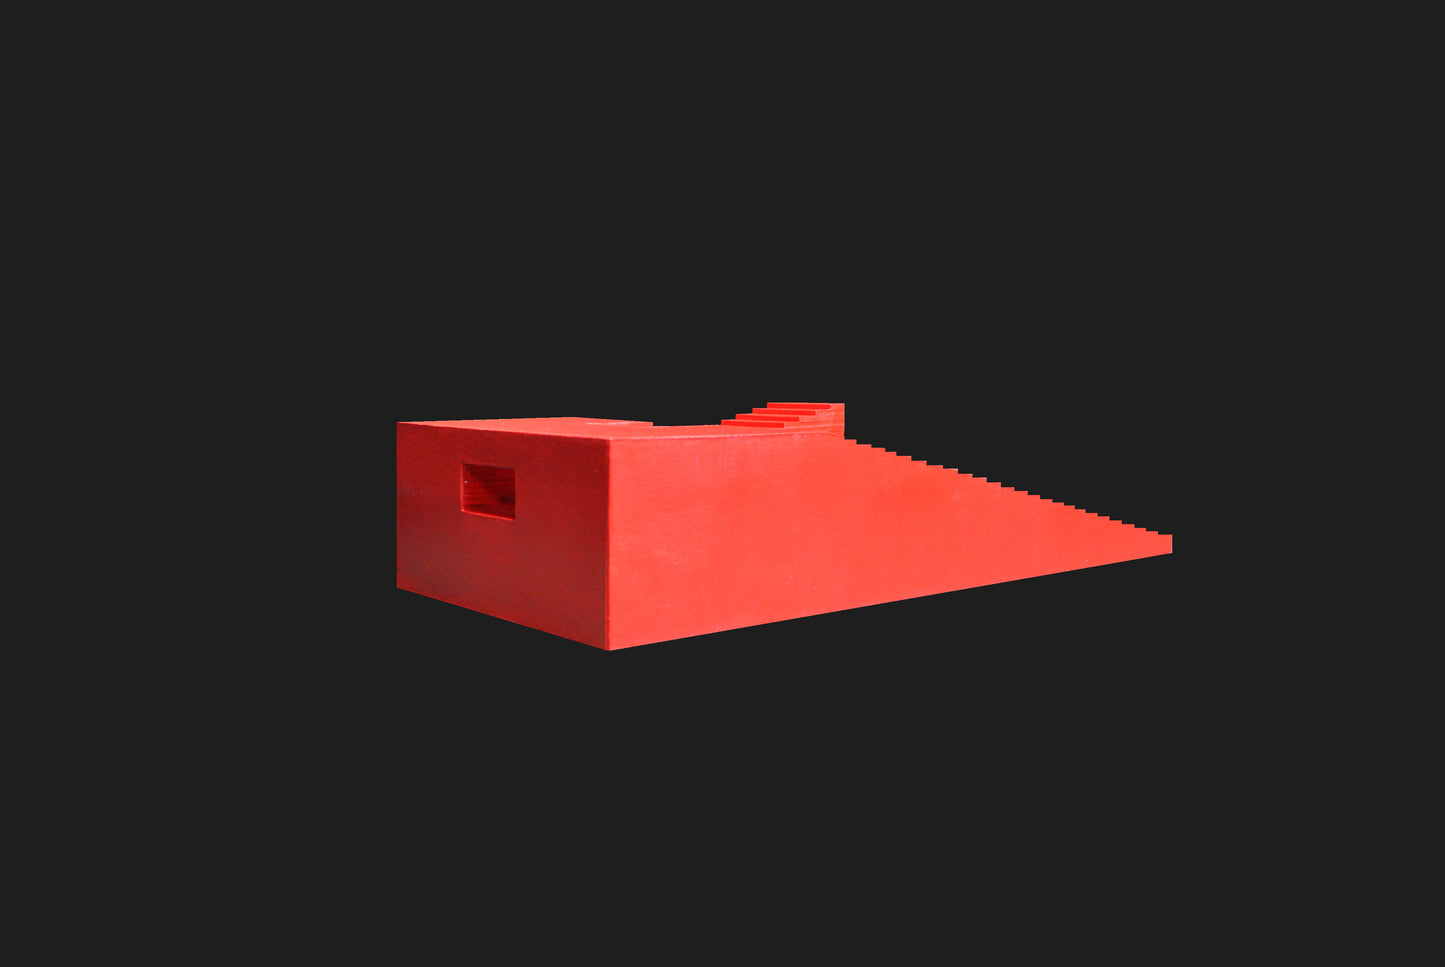 scala rossa - sculpture